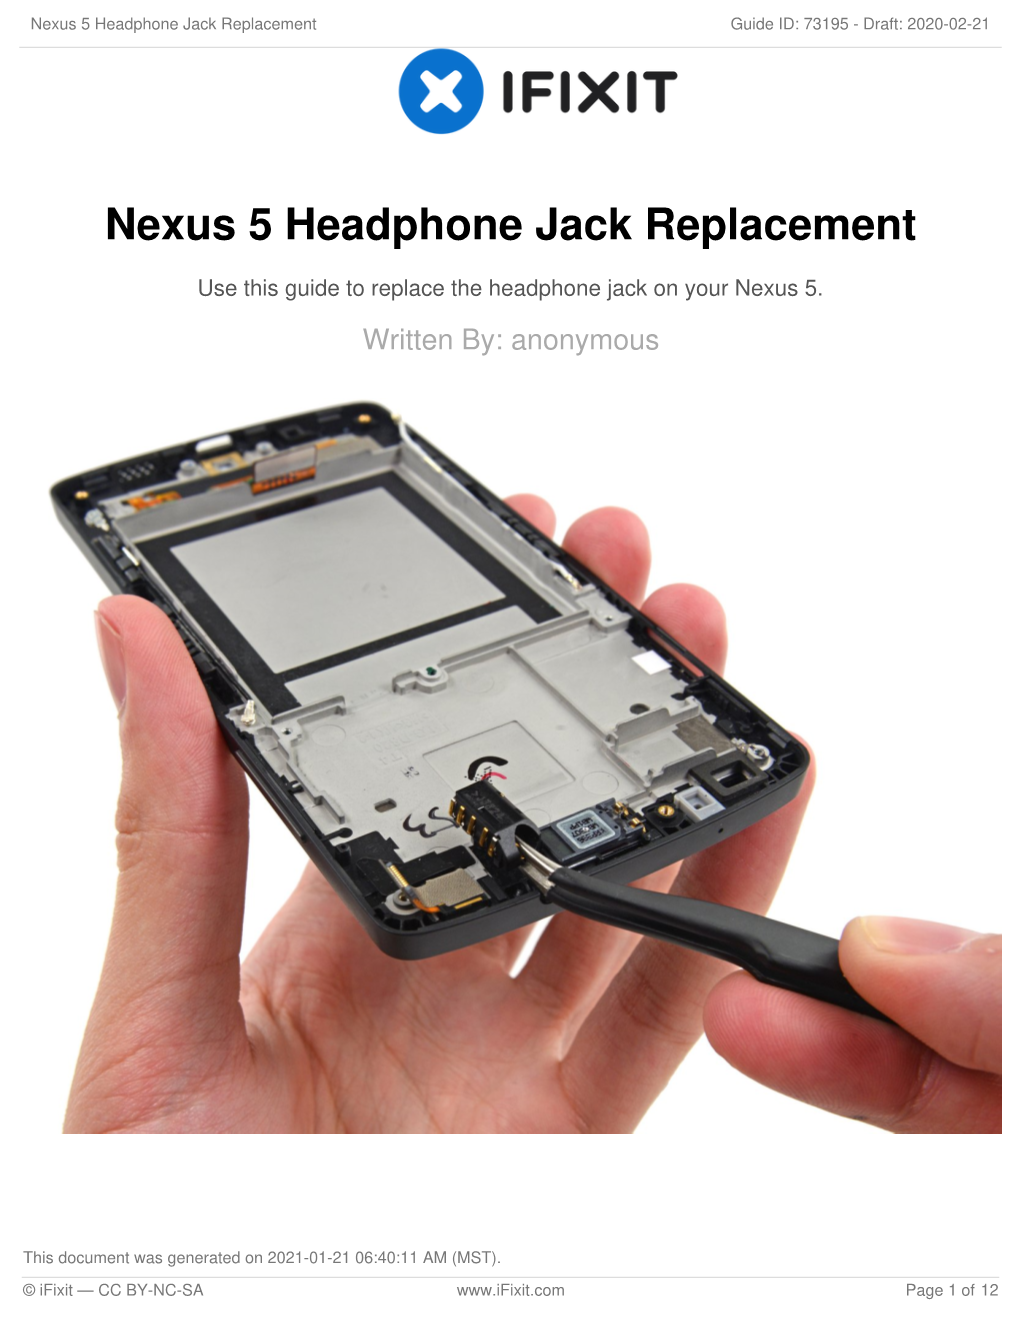 Nexus 5 Headphone Jack Replacement Guide ID: 73195 - Draft: 2020-02-21